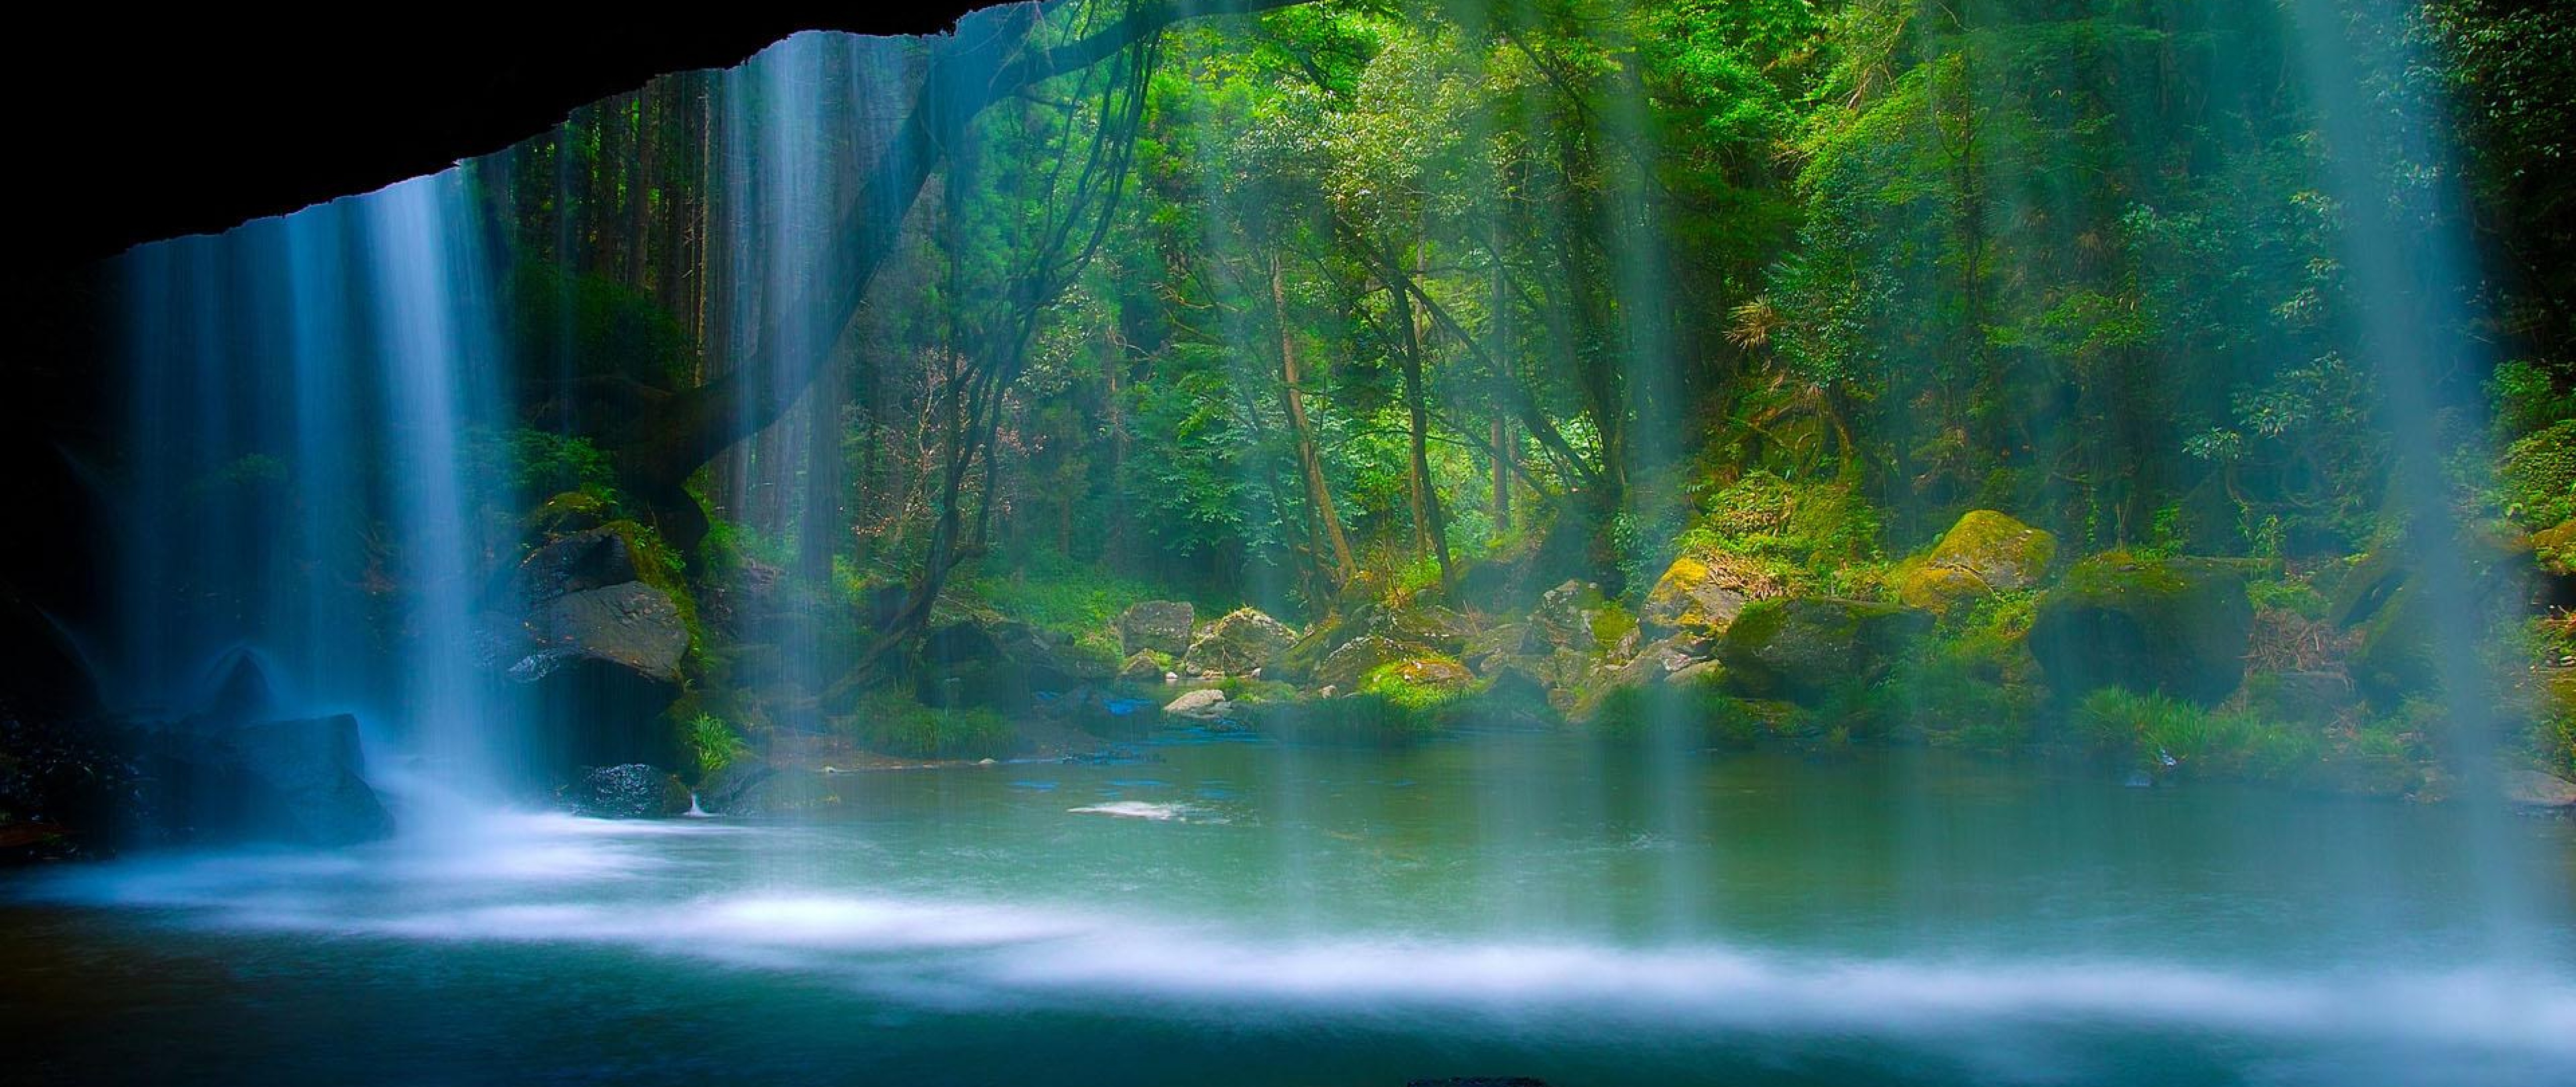 Download Free Rainforest Waterfall Full HD Wallpaper 4K Ultra HD Wide TV